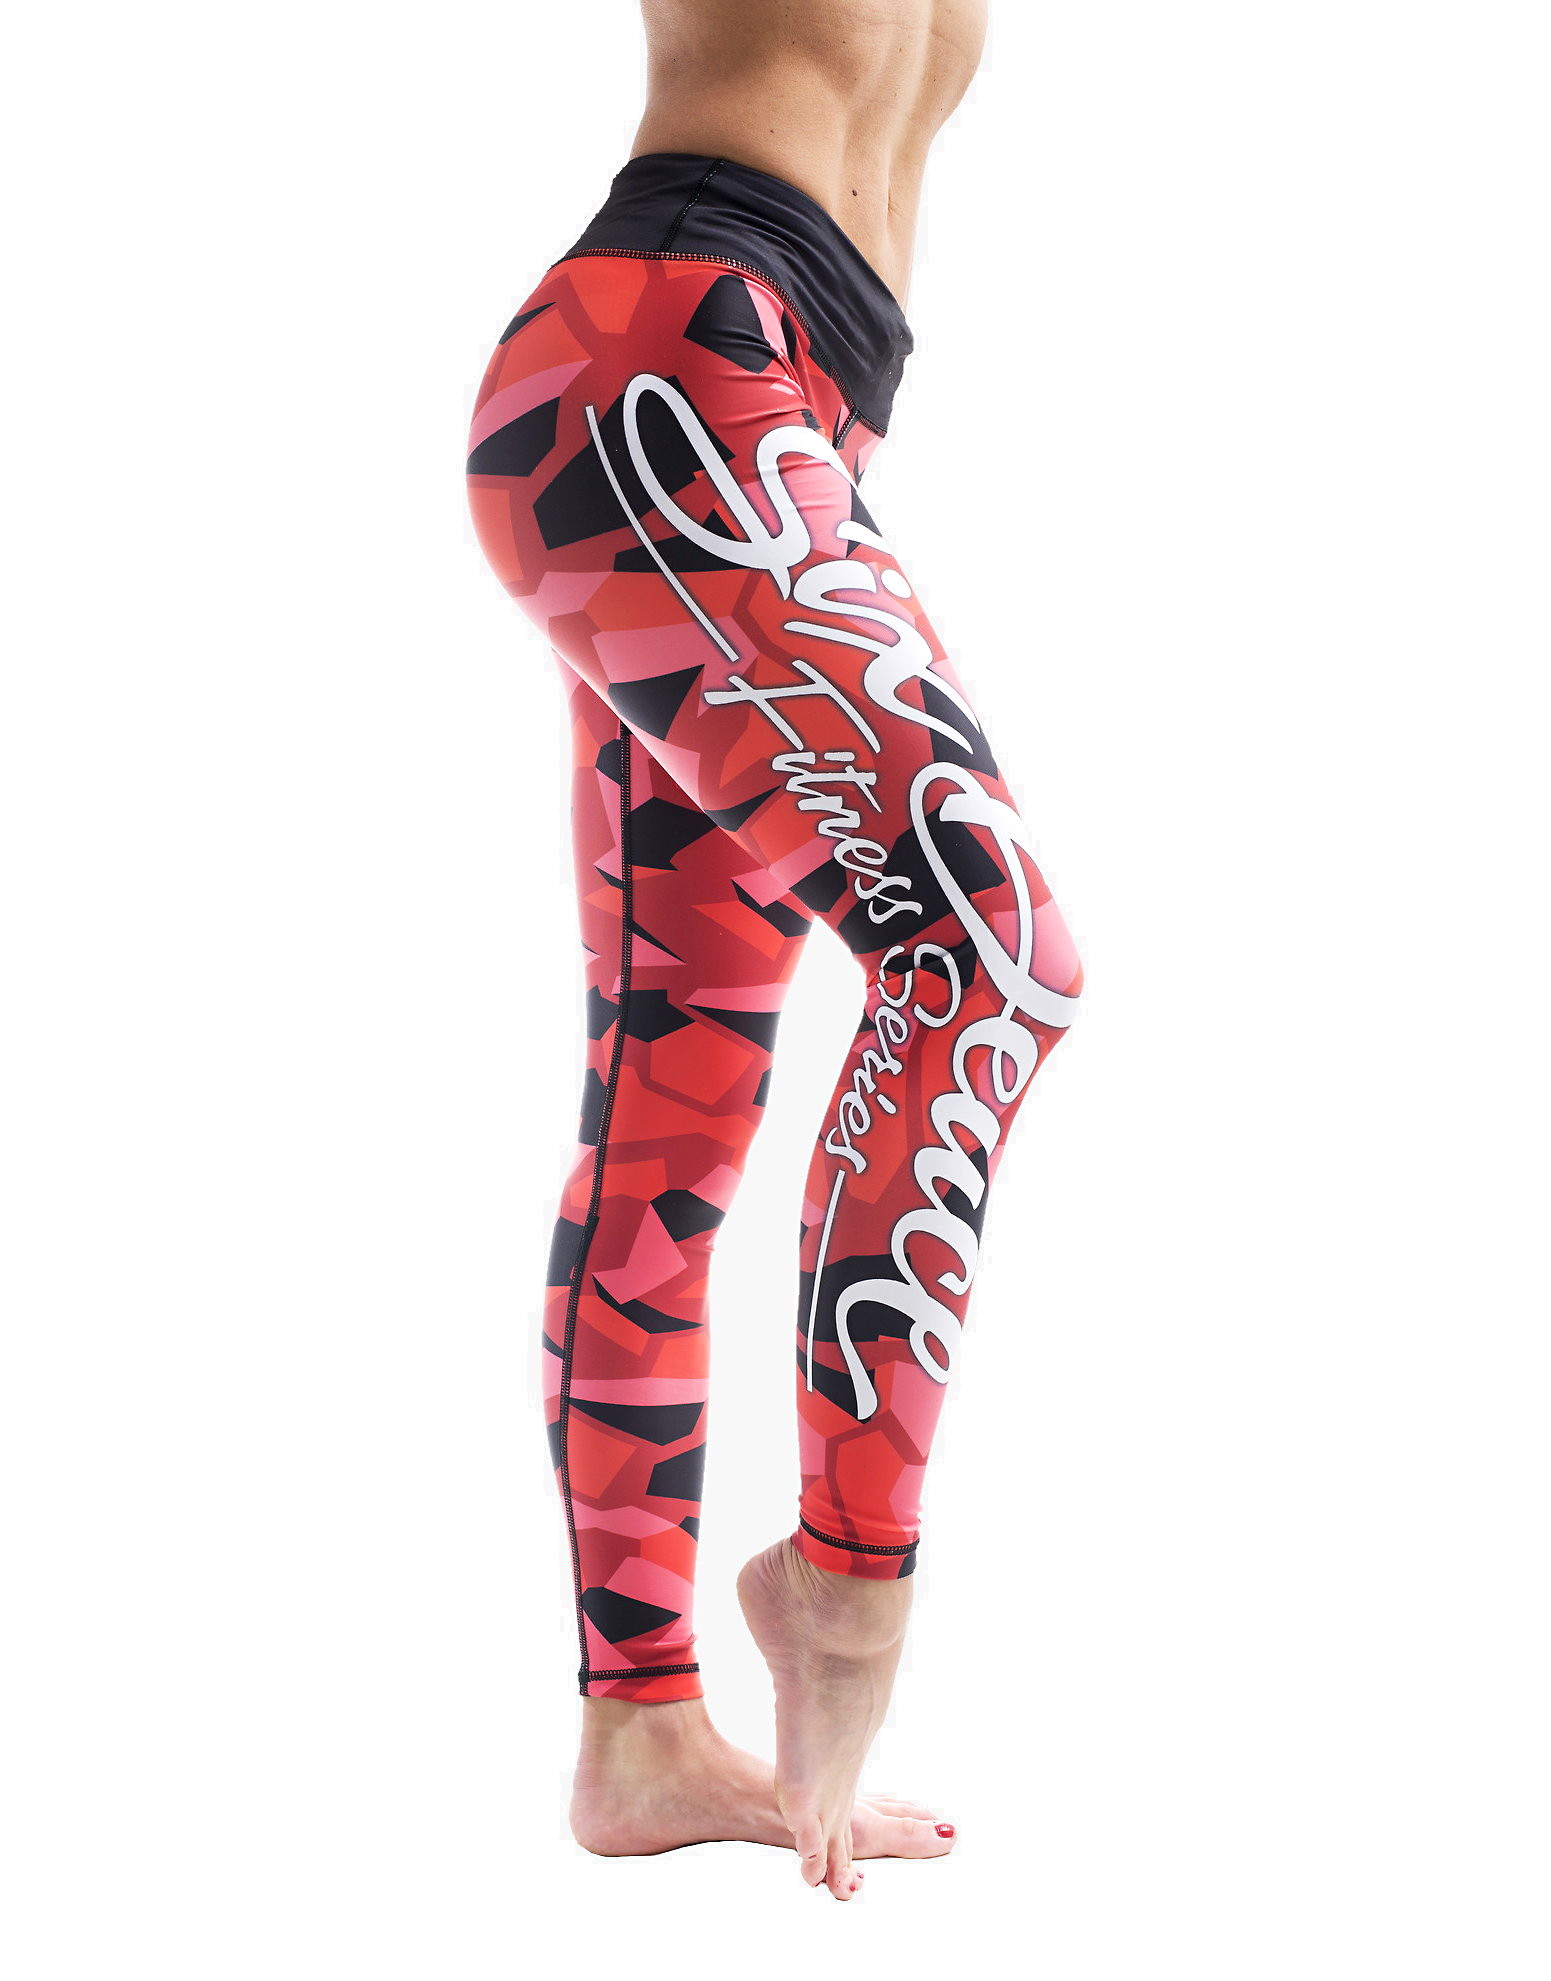 Pgeraug yoga pants Bike Yoga Elastic High Waist Shorts Leggings Sports  pants for women Red L 